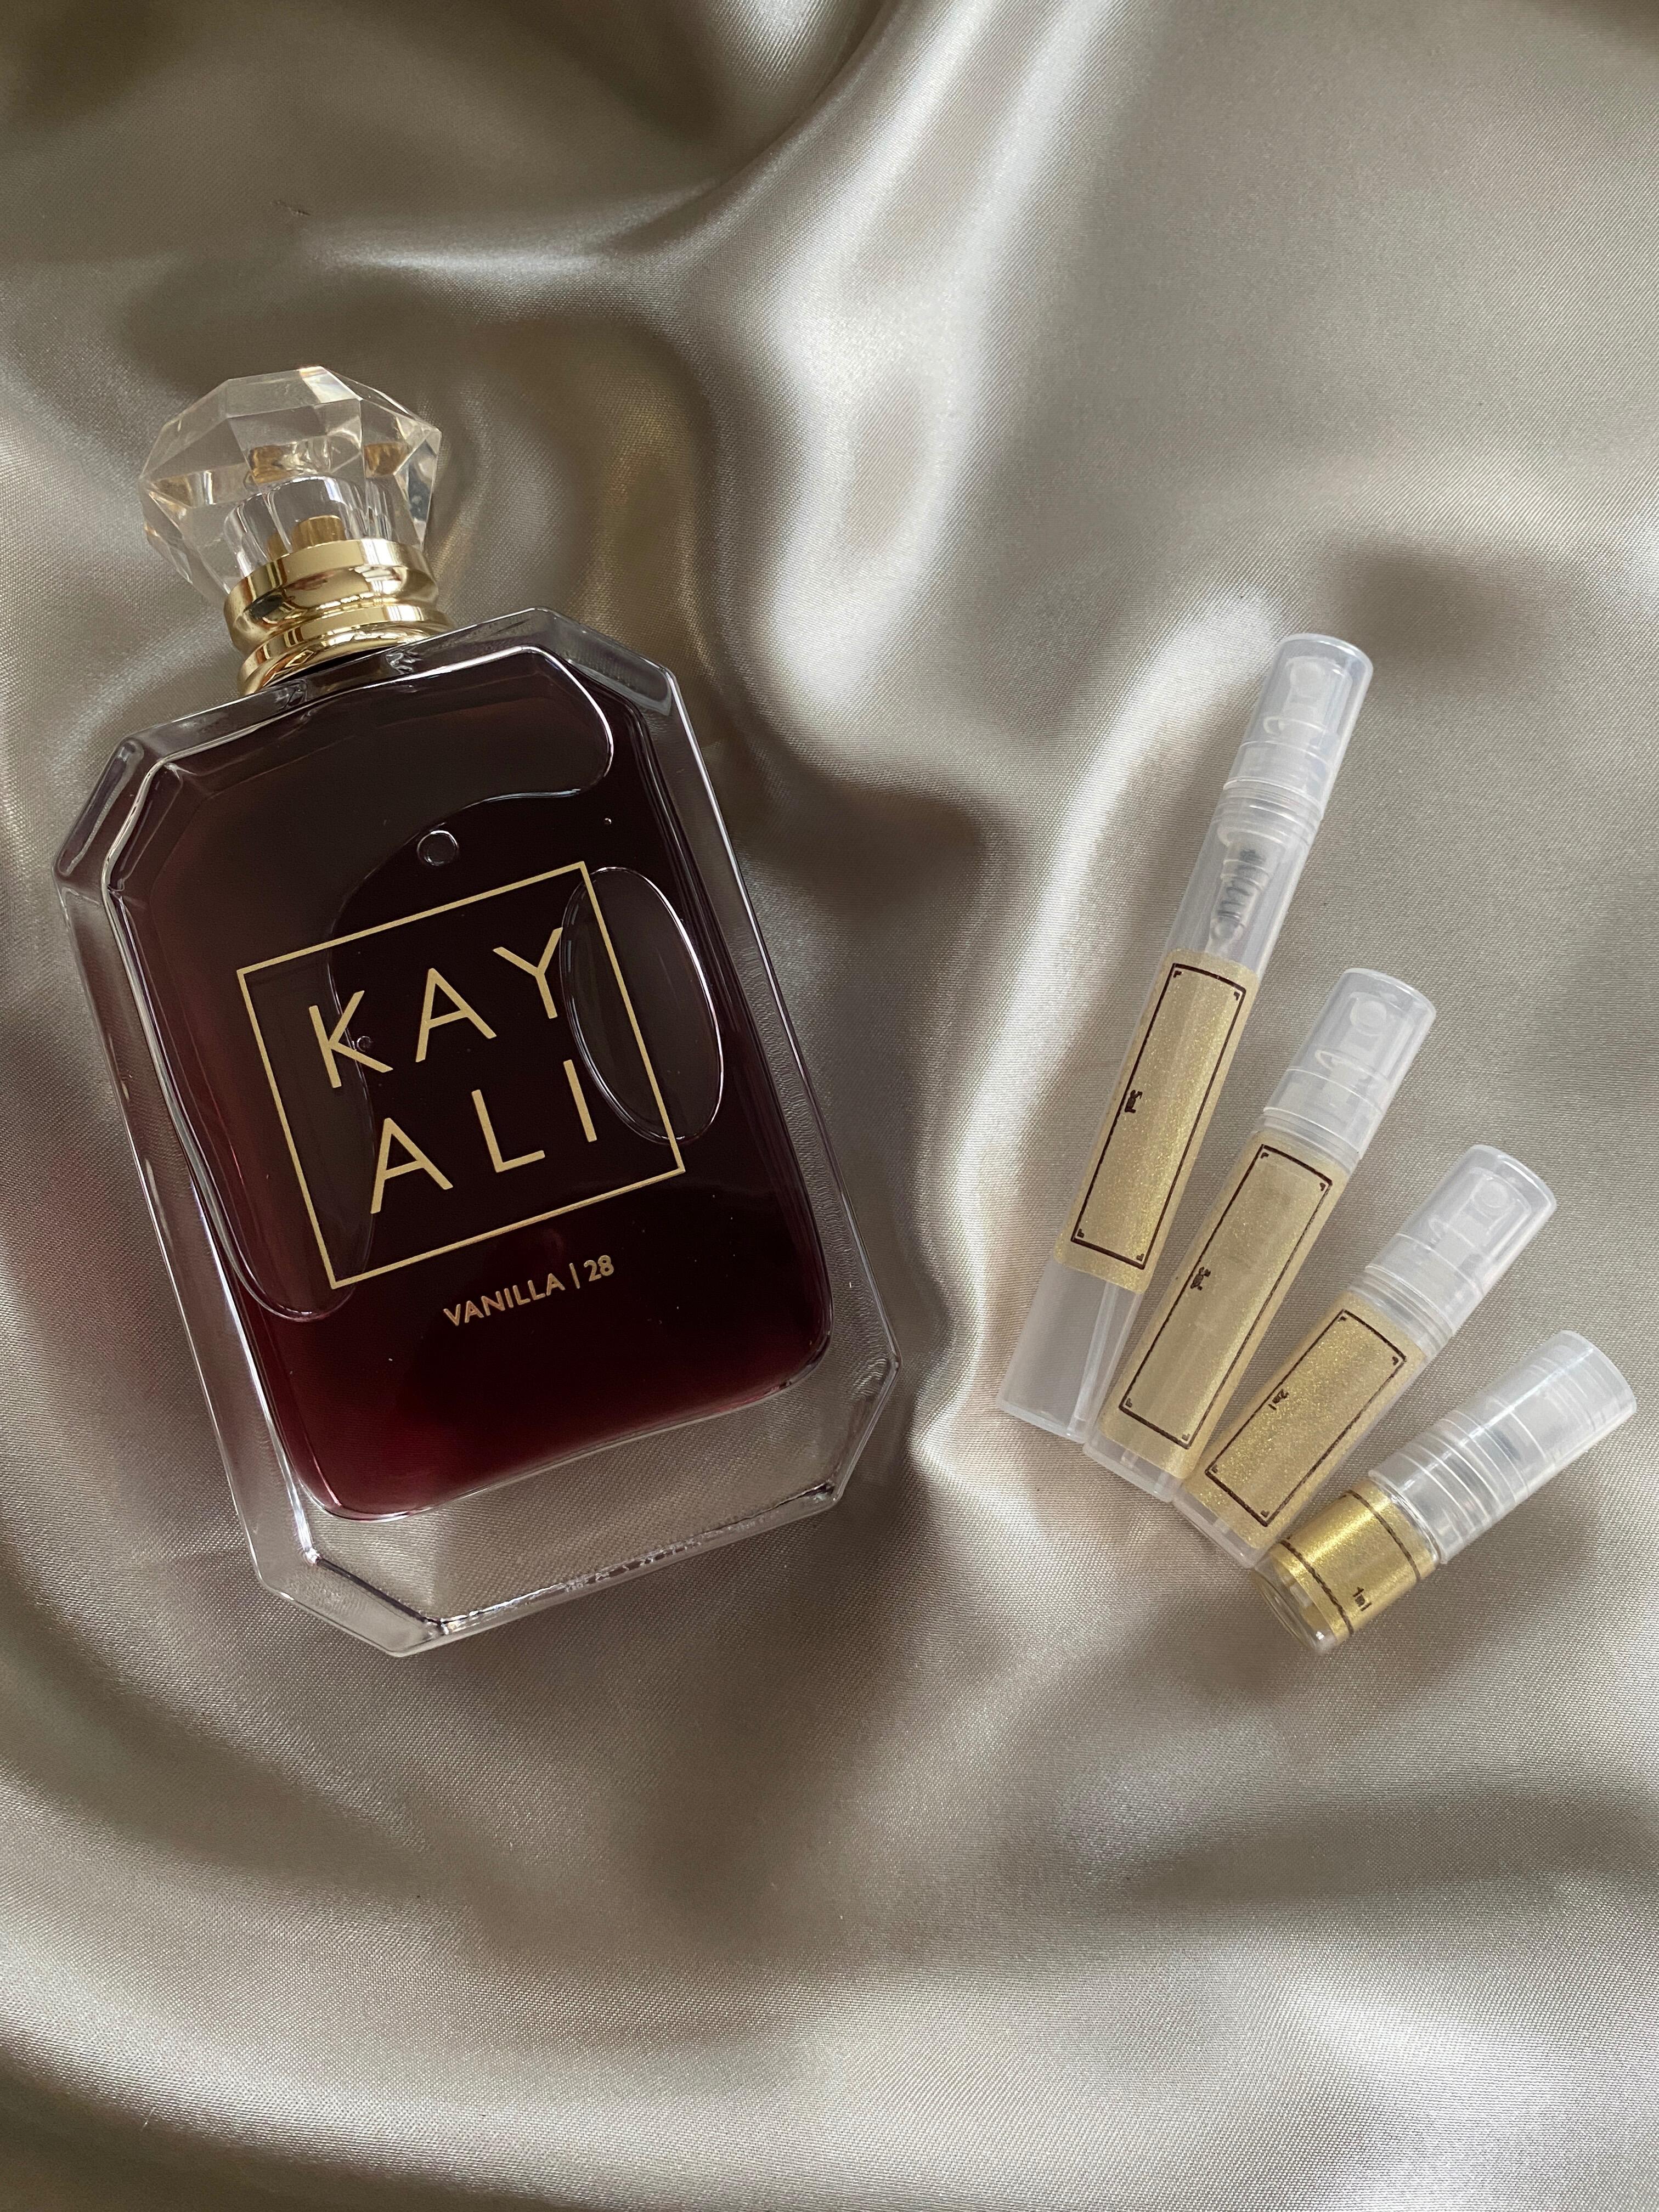 Kayali - Vanilla 28 - Fragrance Samples